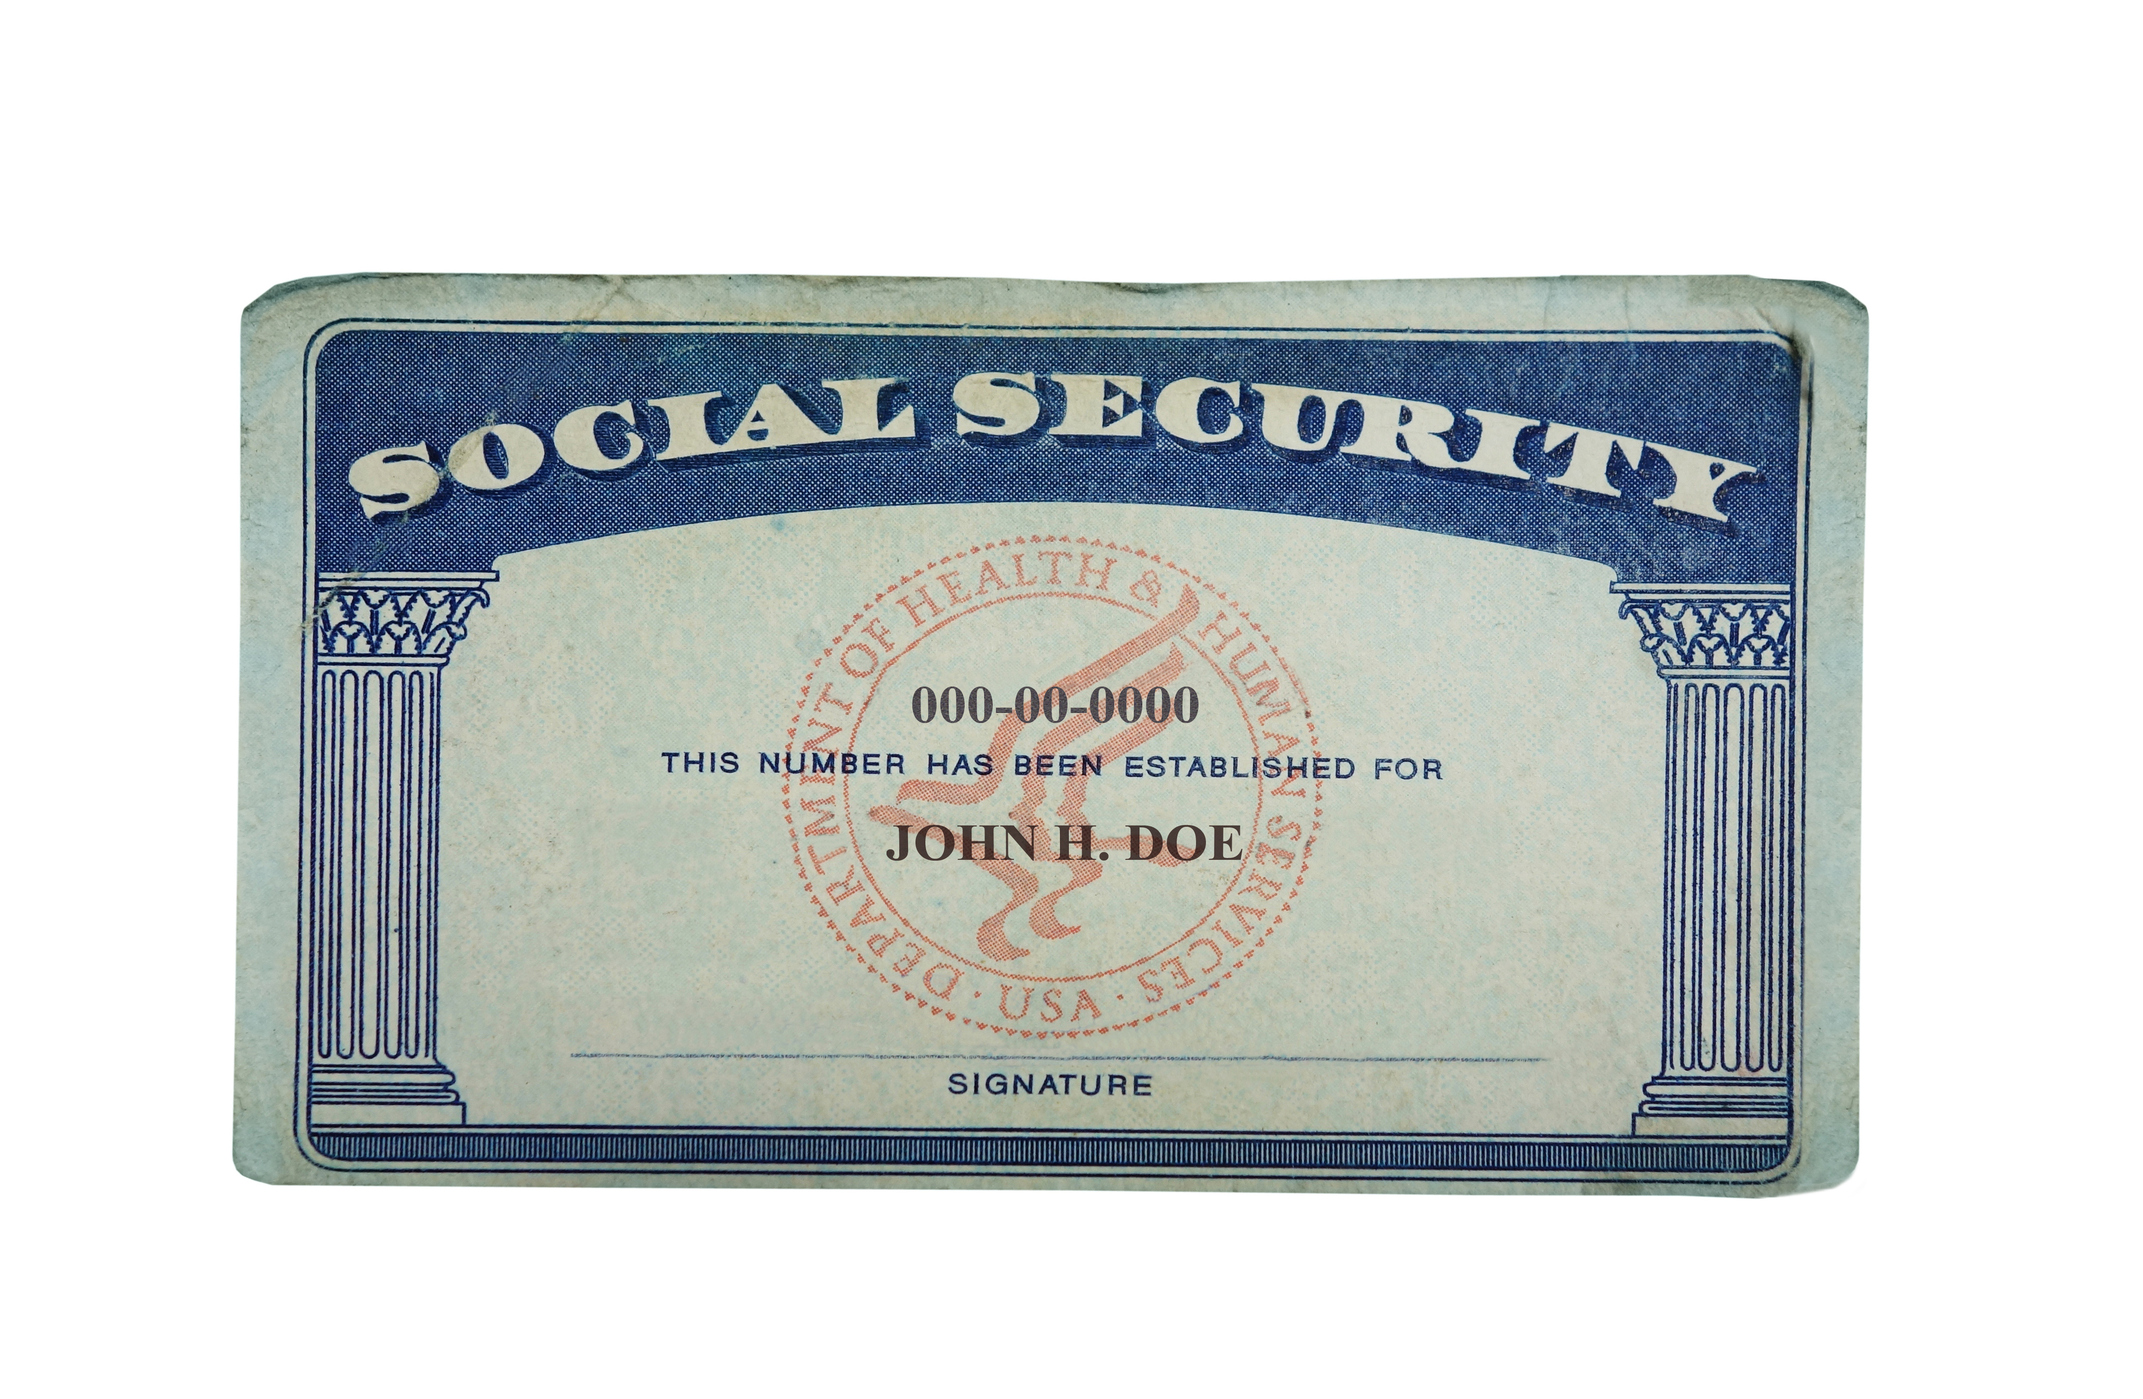 USA Social Security